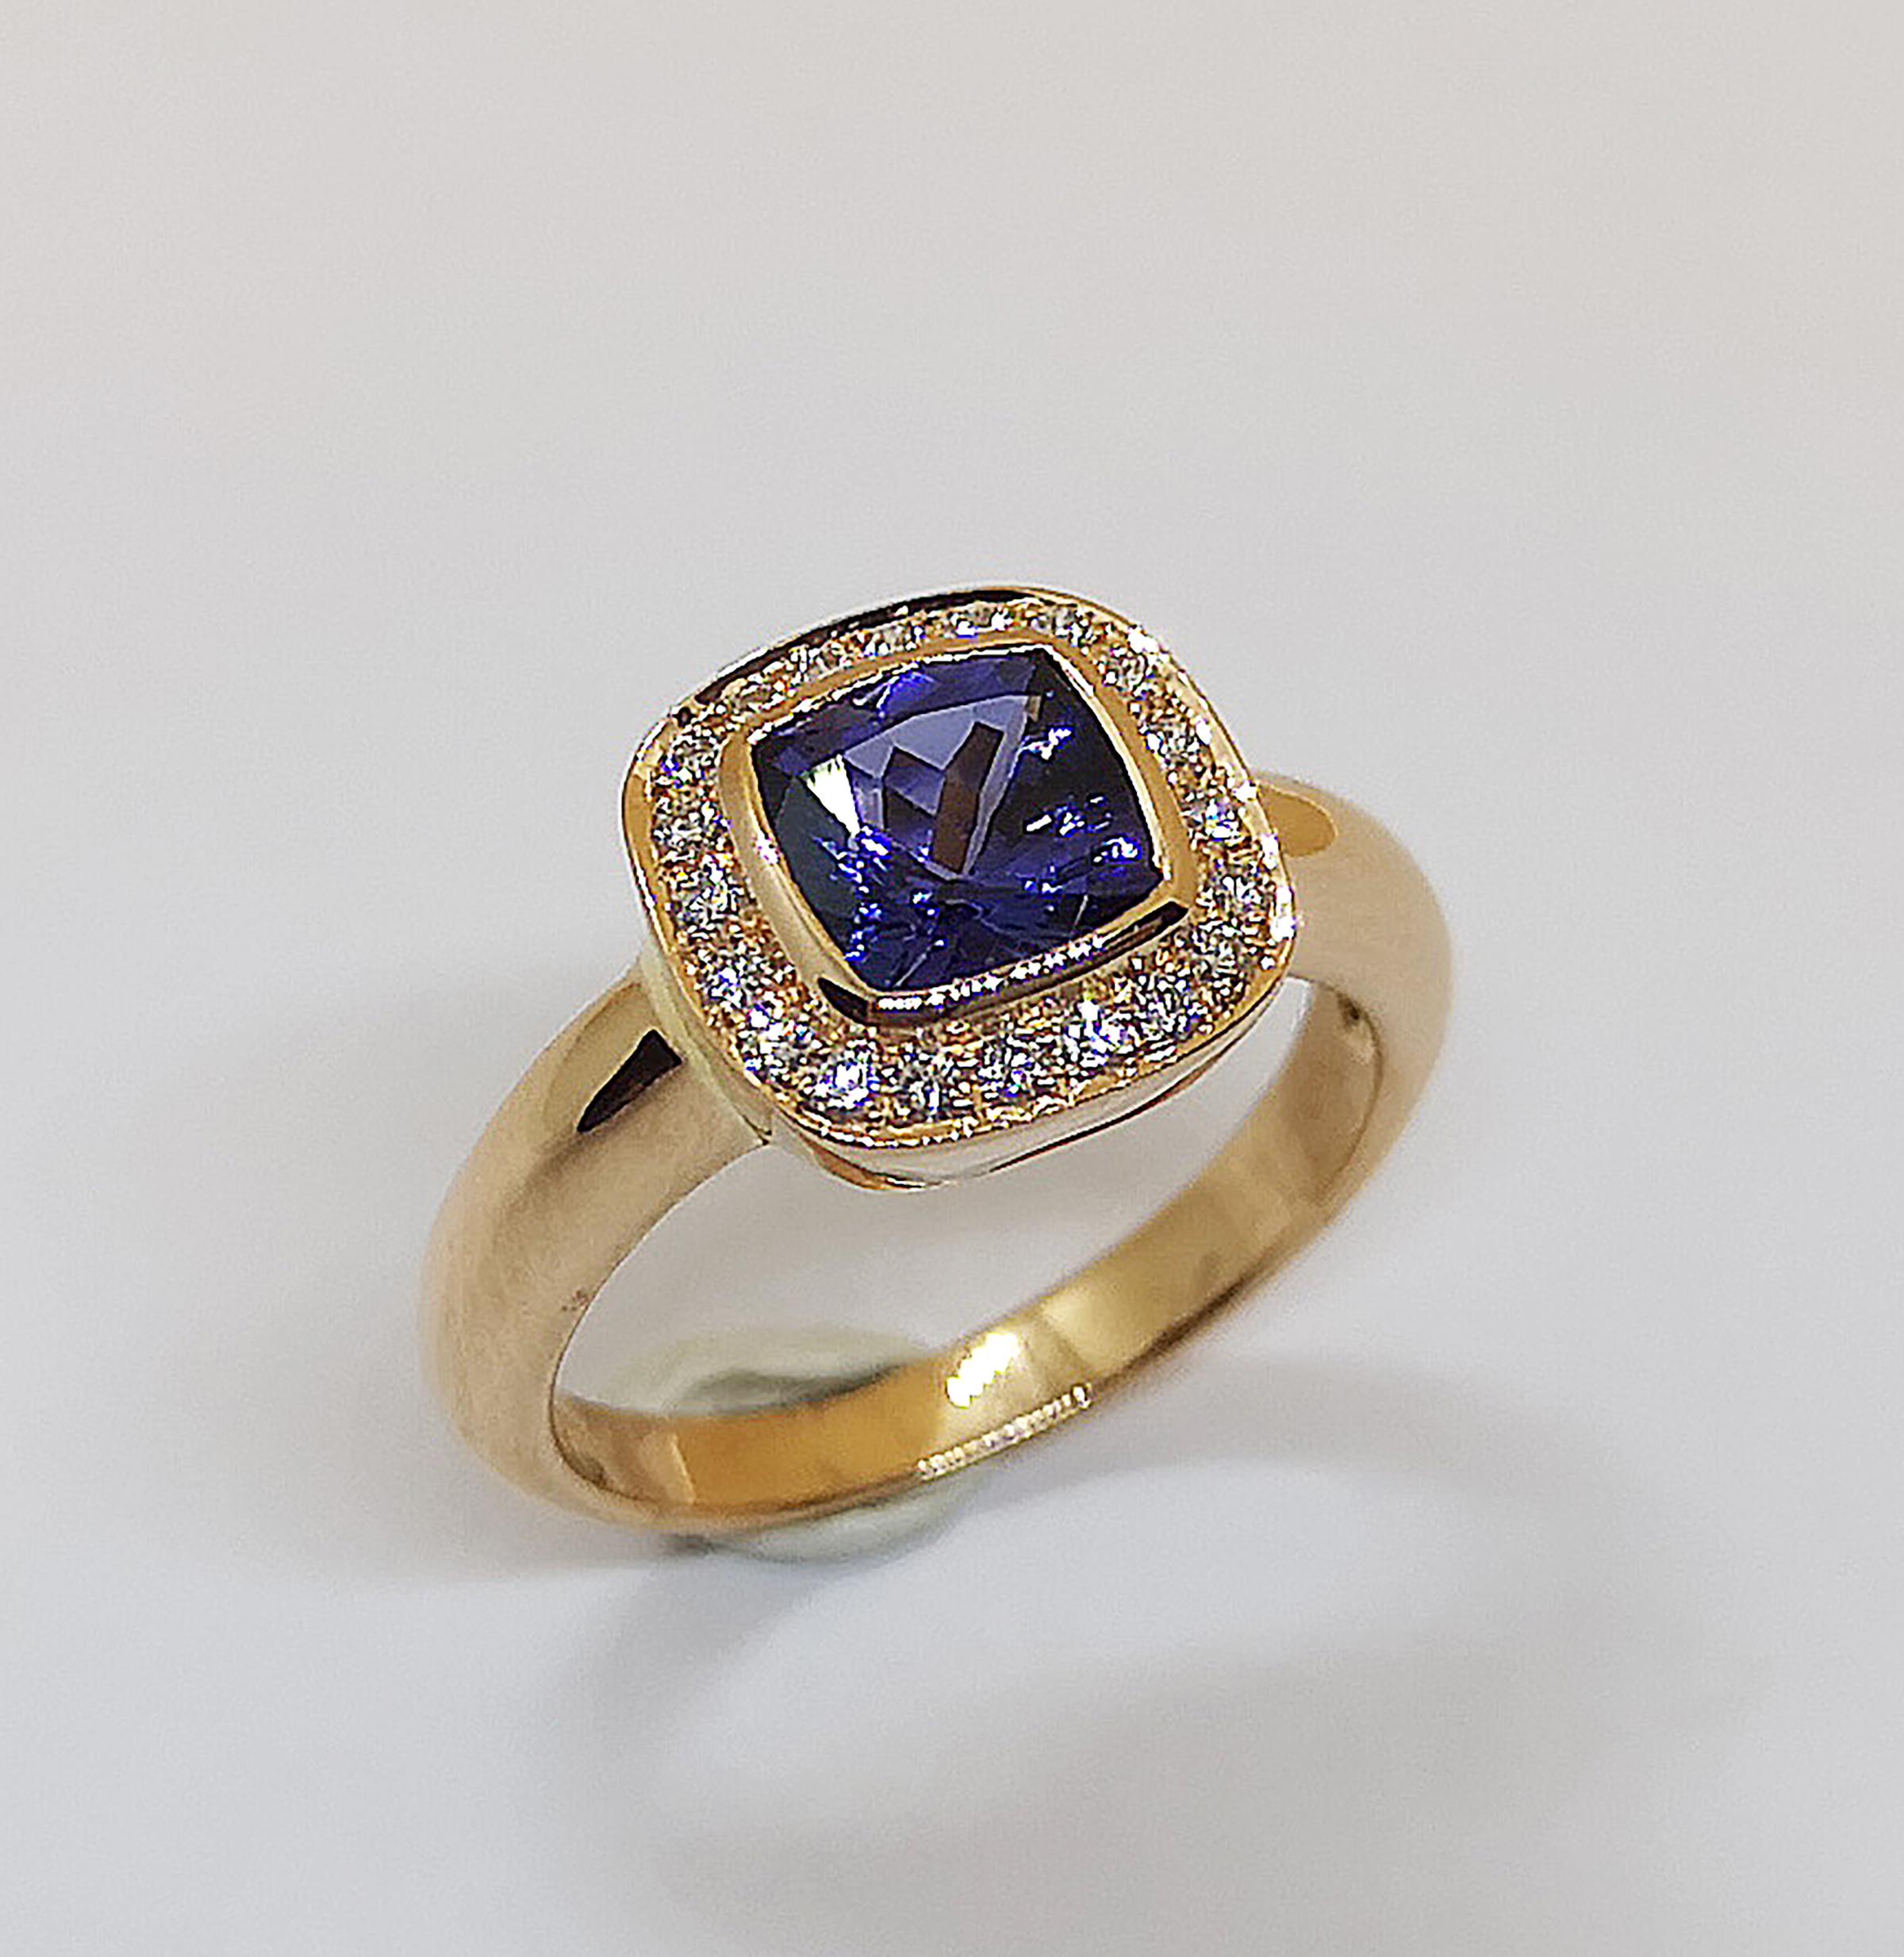 Tanzanite 1.45 carats with Diamond 0.16 carat Ring set in 18 Karat Rose Gold Settings 

Width:  1.0 cm 
Length: 1.0 cm
Ring Size: 52
Total Weight: 5.33 grams

